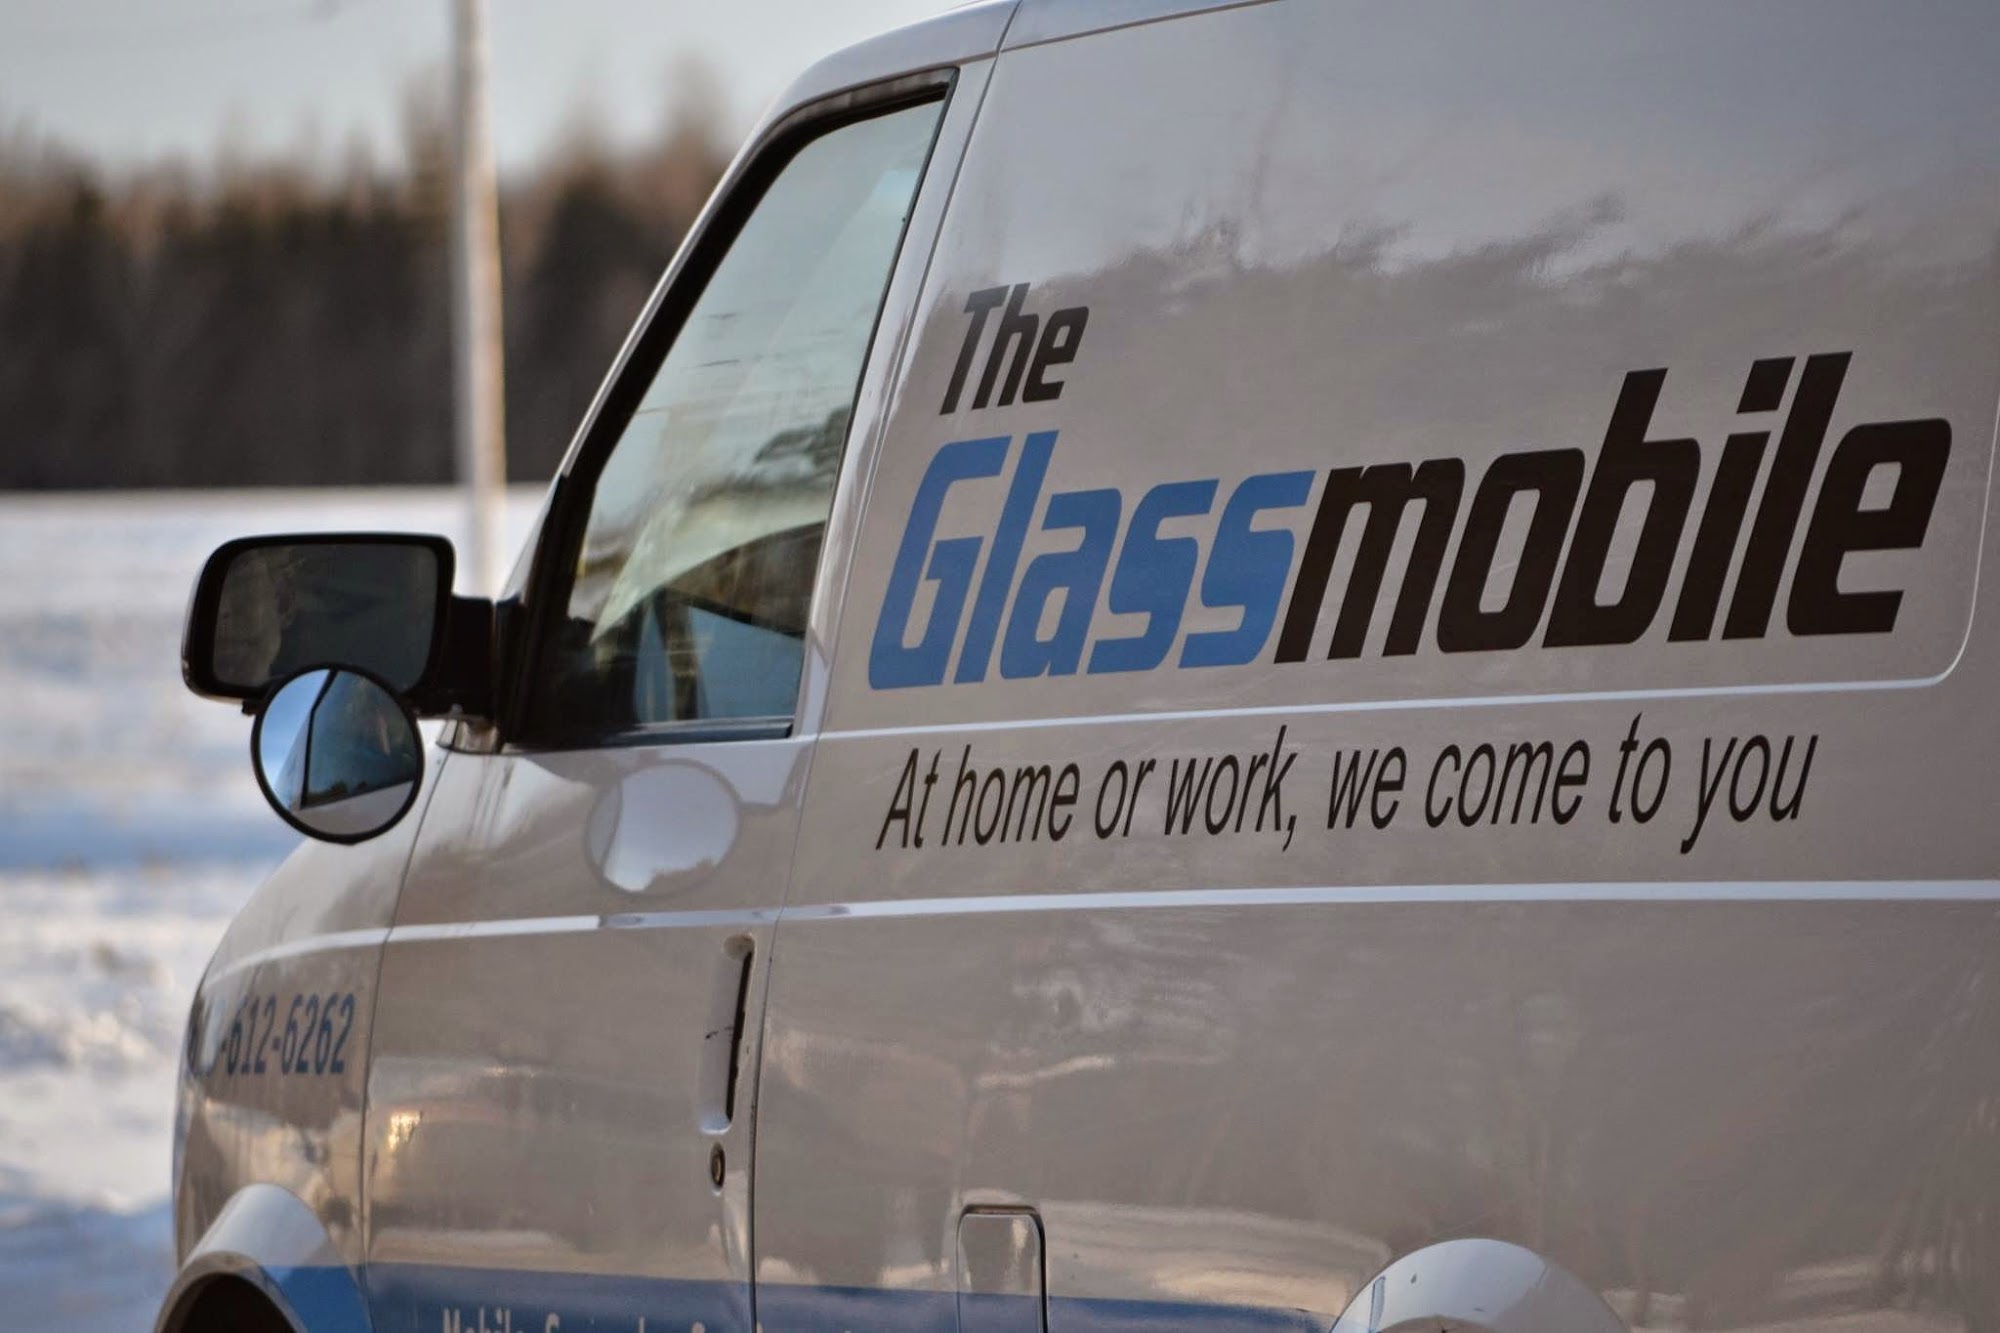 The Glassmobile Inc.